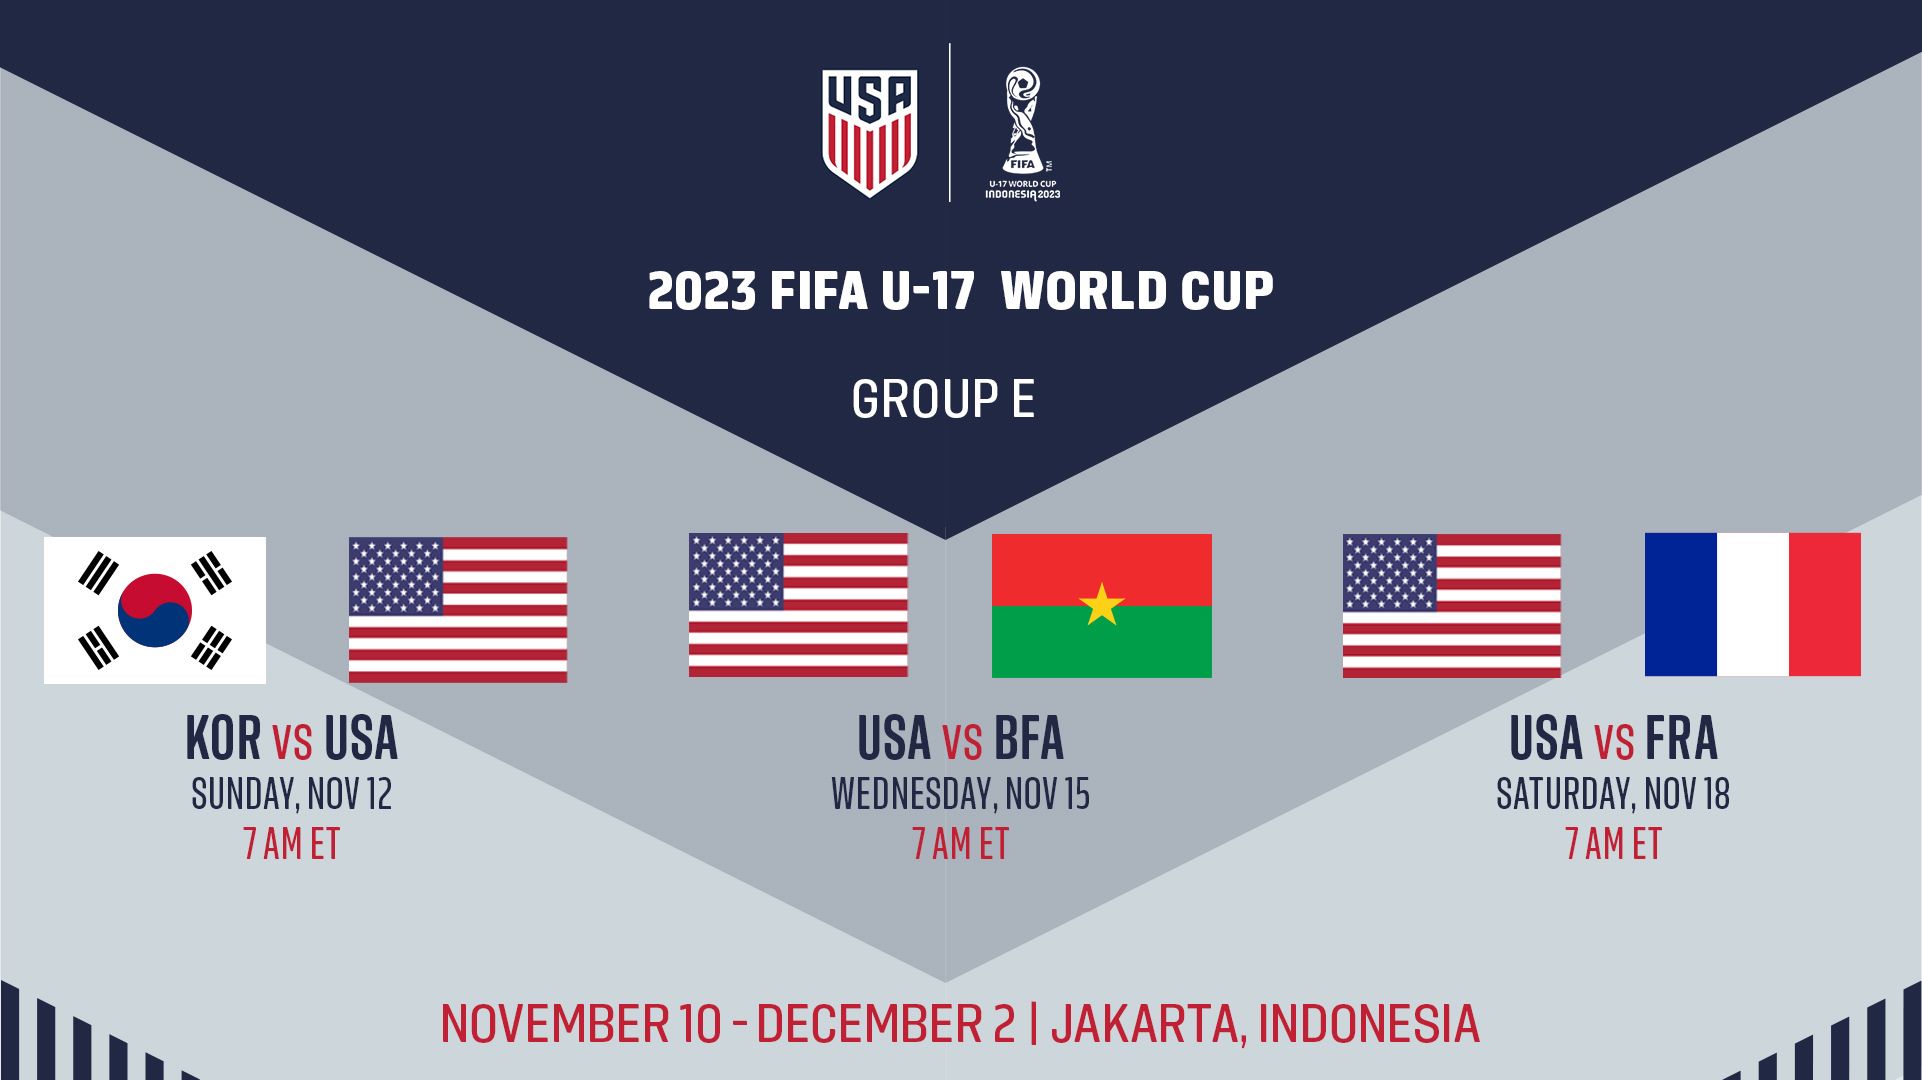 Amerika Serikat akan menghadapi Republik Korea, Burkina Faso, dan Prancis di Grup E Piala Dunia FIFA U-17 2023 di Indonesia.